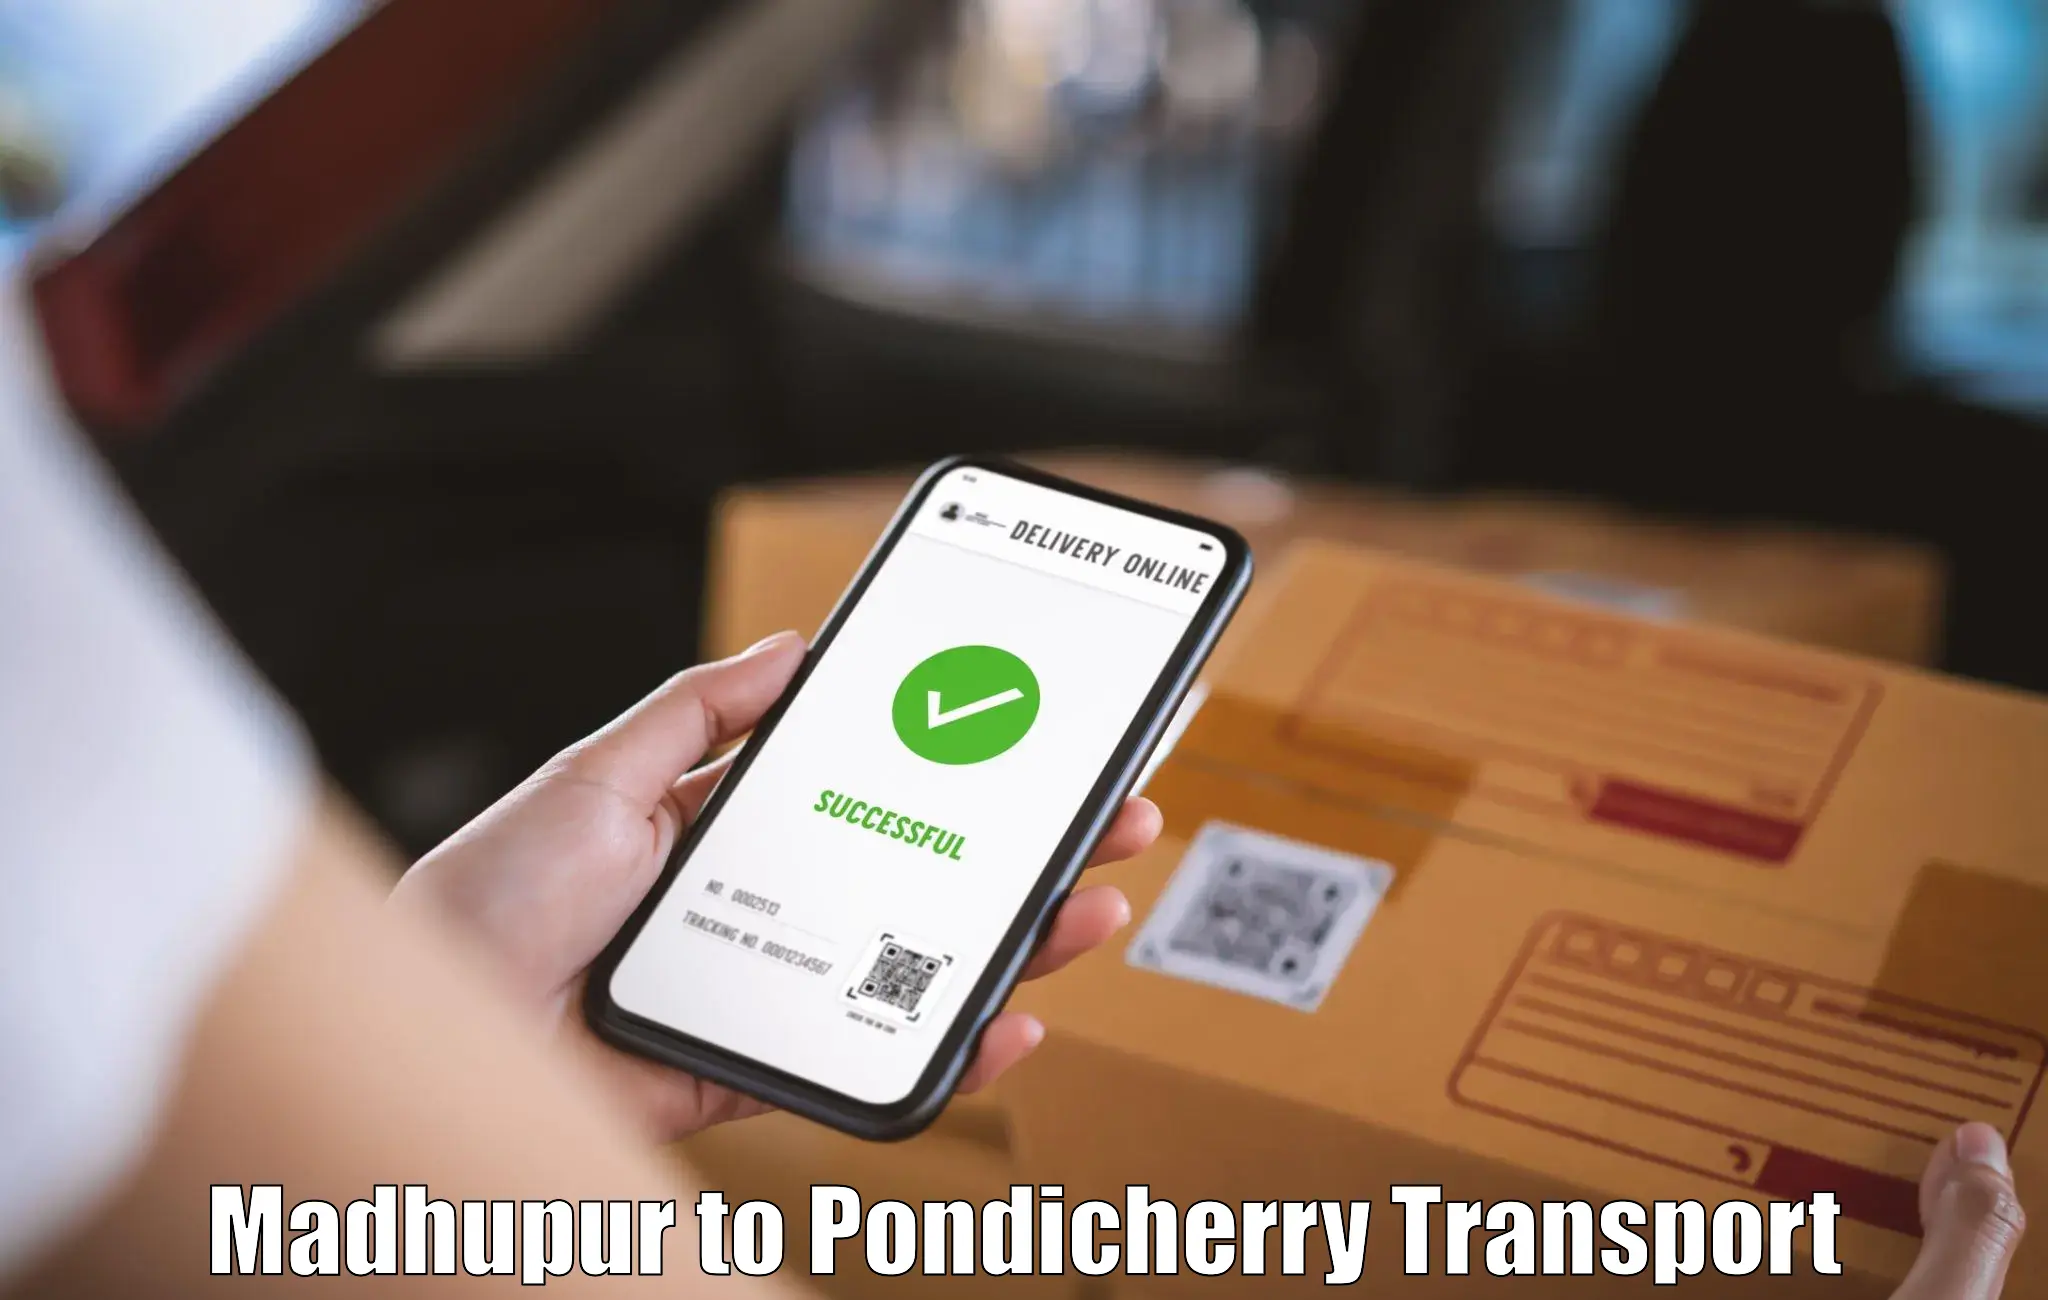 Transport in sharing Madhupur to Pondicherry